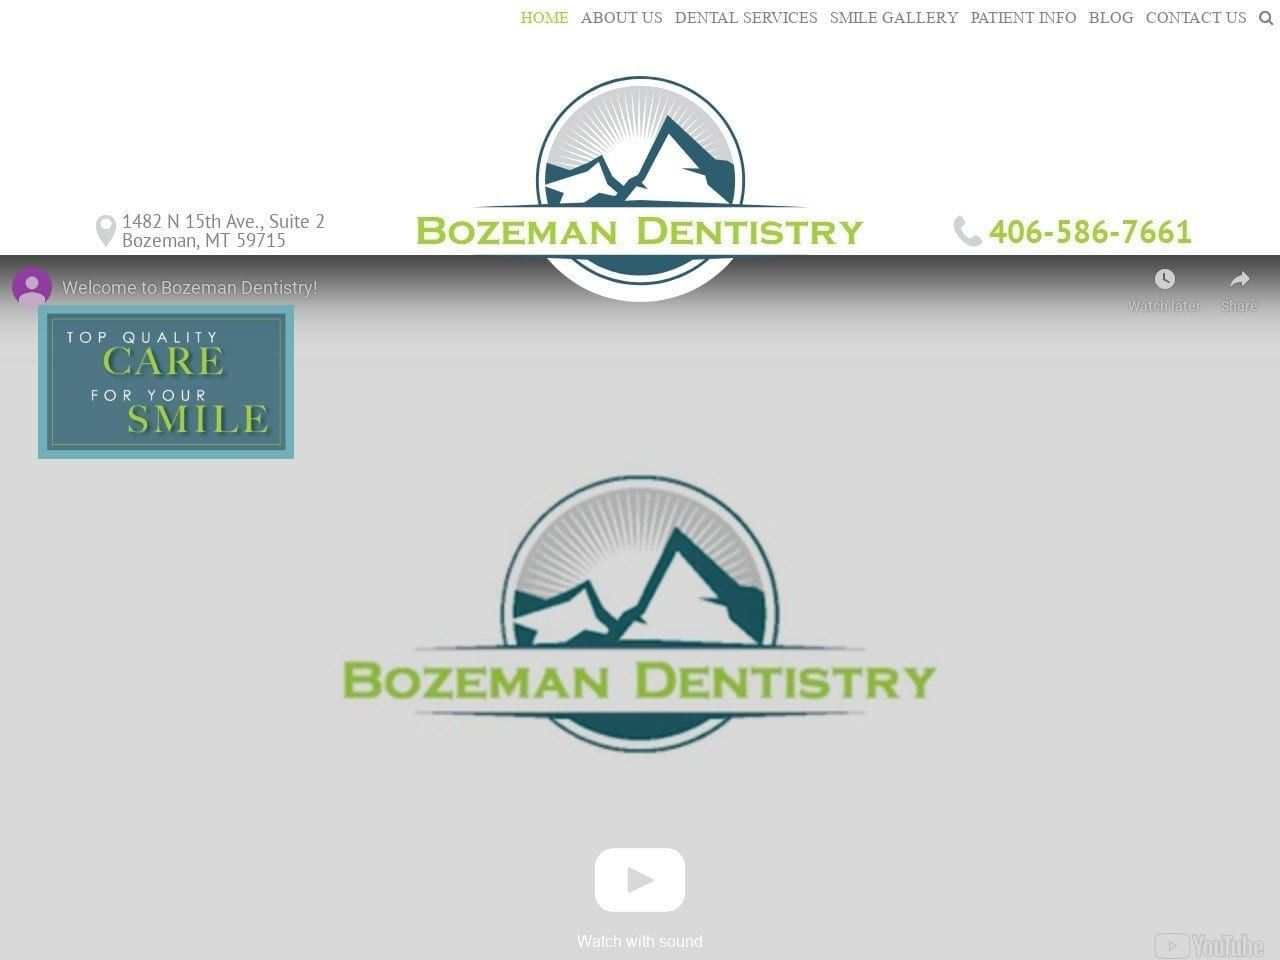 Bozeman Dentistry Website Screenshot from bozemandentistry.com